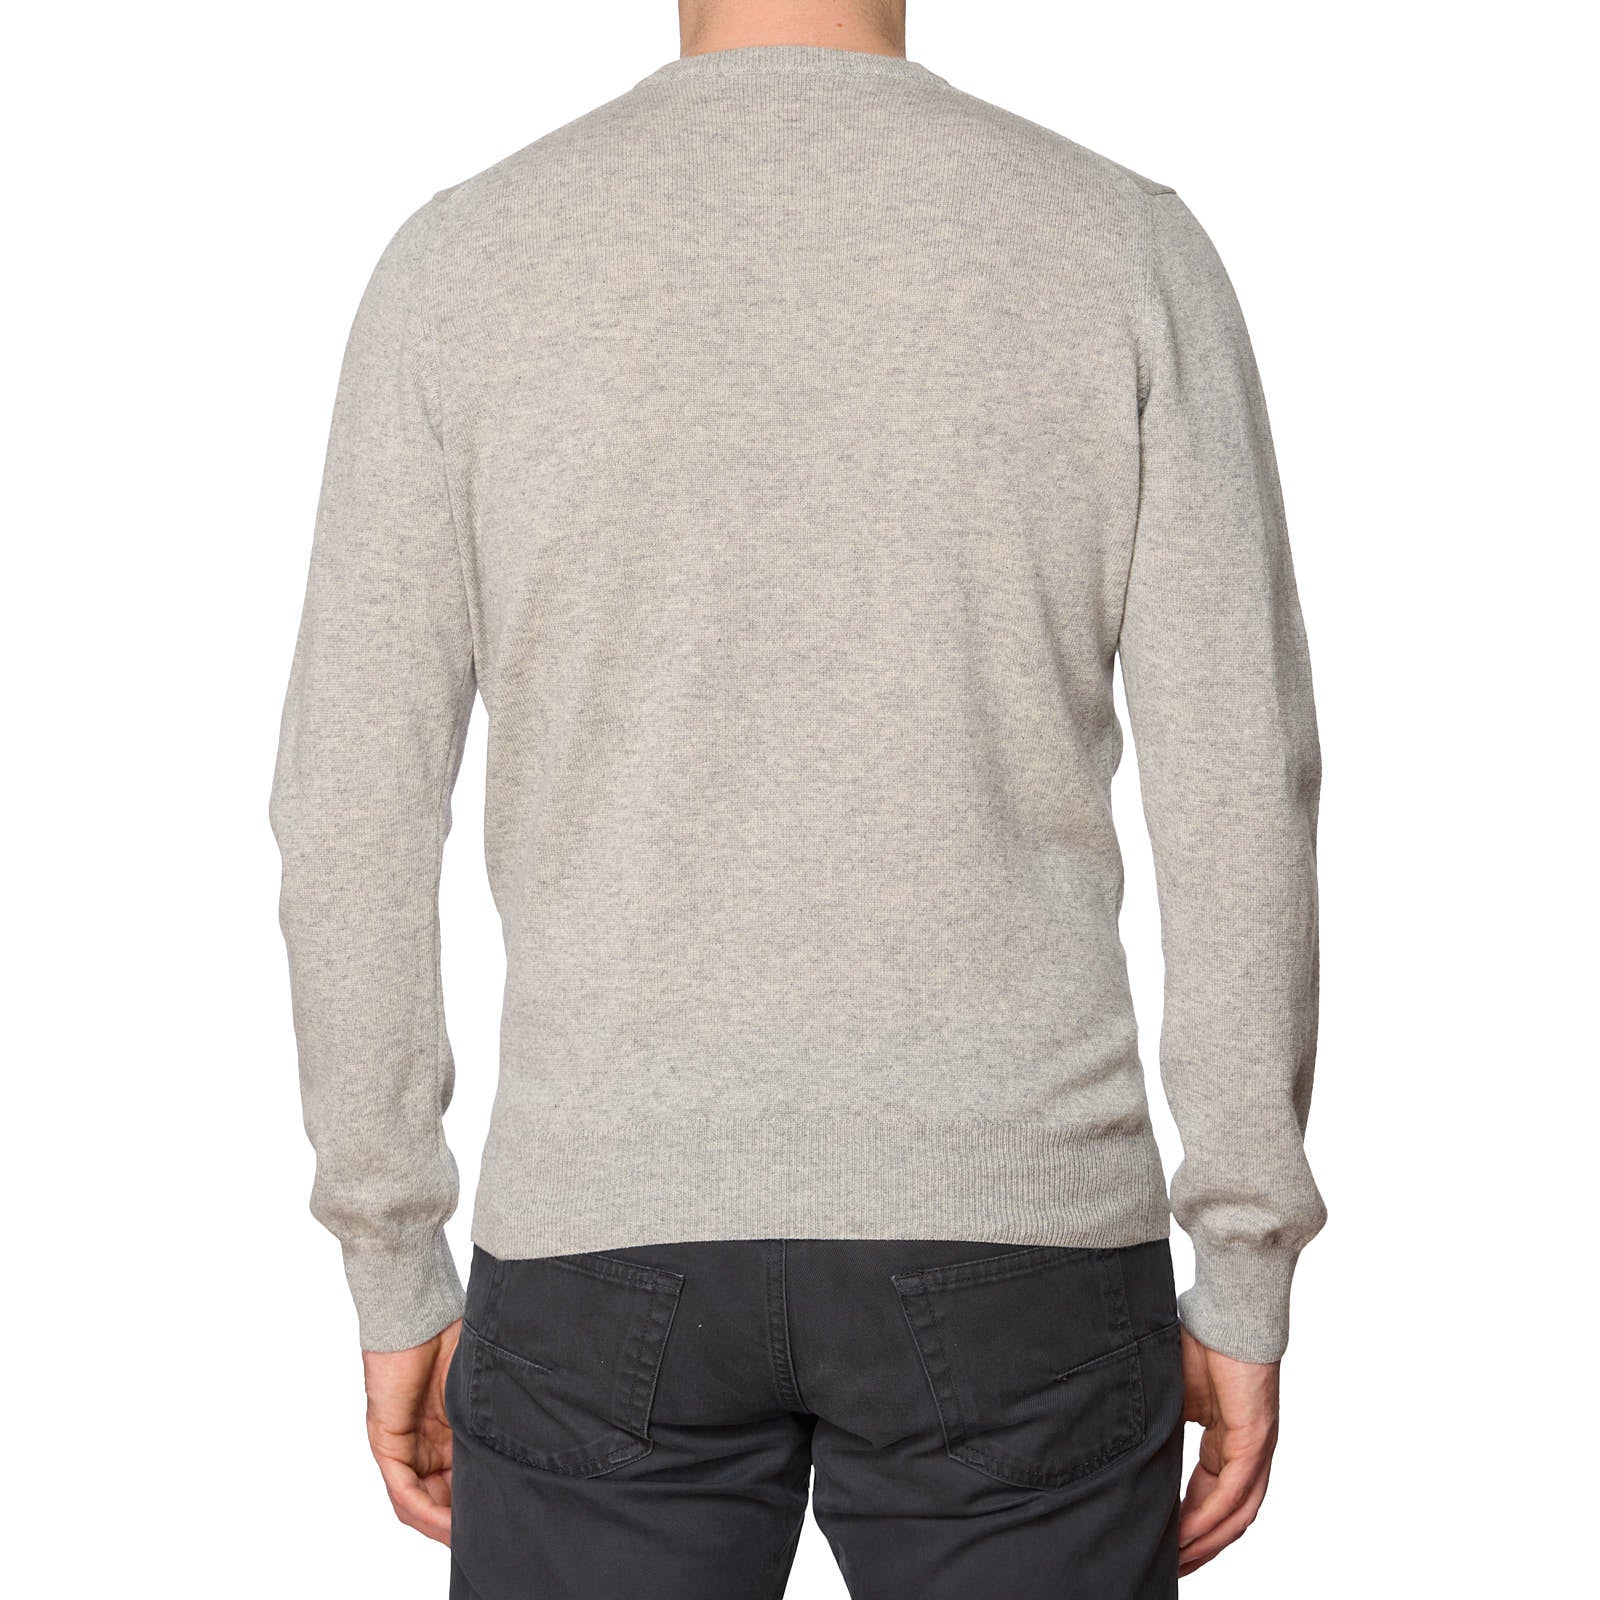 VANNUCCI Milano Gray Cashmere Knit Crewneck Sweater EU 48 NEW US S